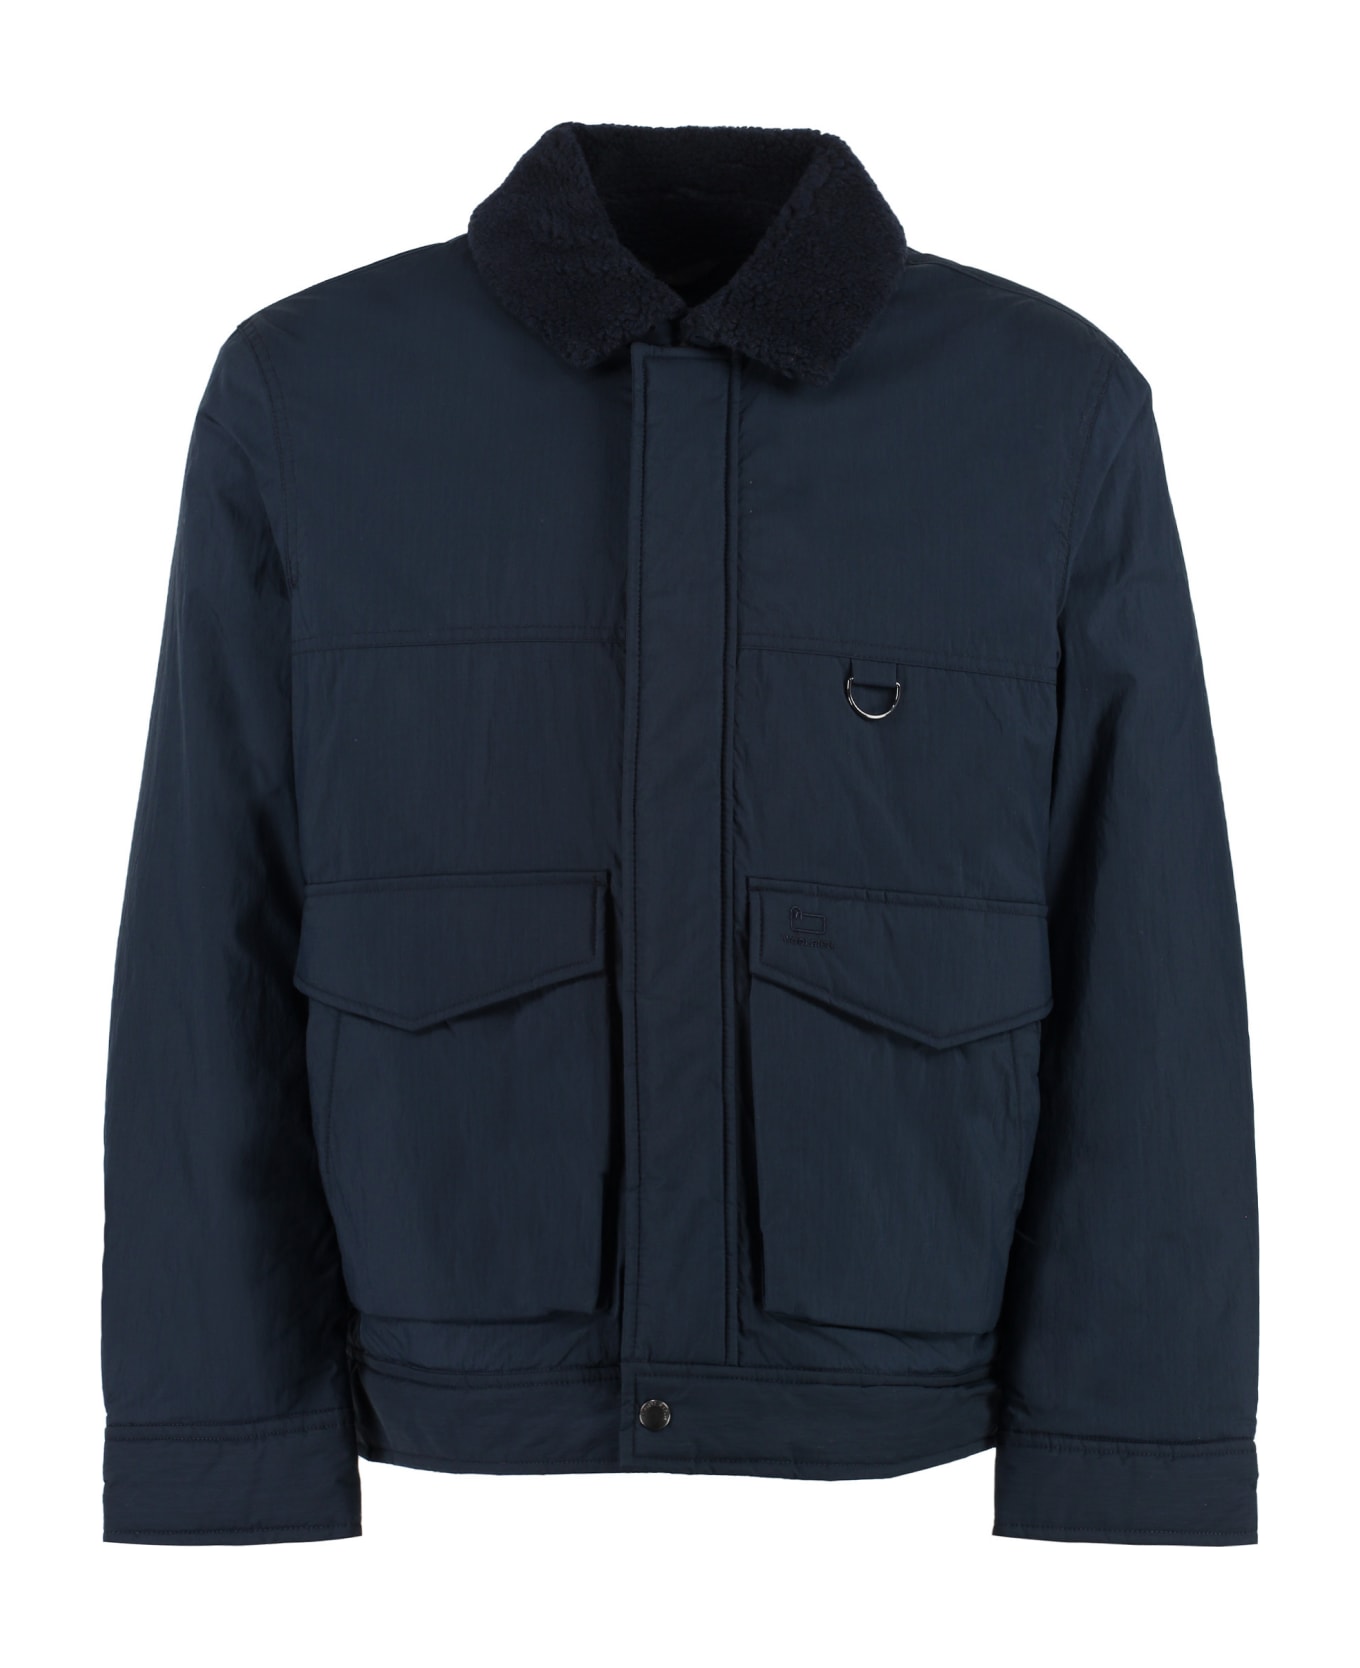 Woolrich Cotton Blend Jacket - blue レインコート